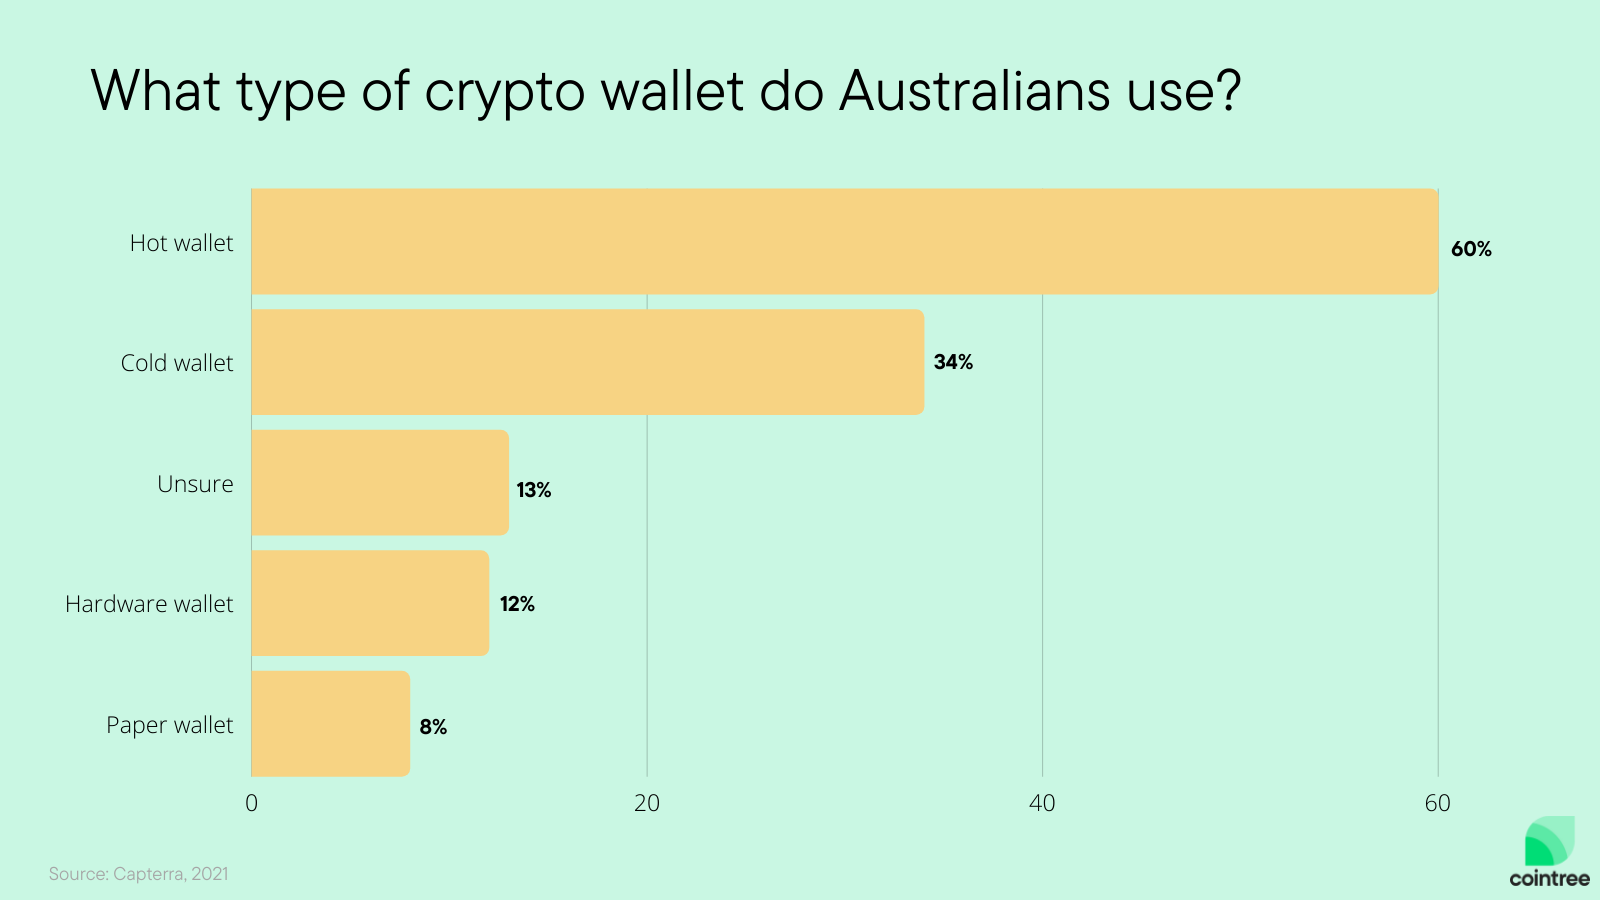 60% of Australians use a hot wallet.